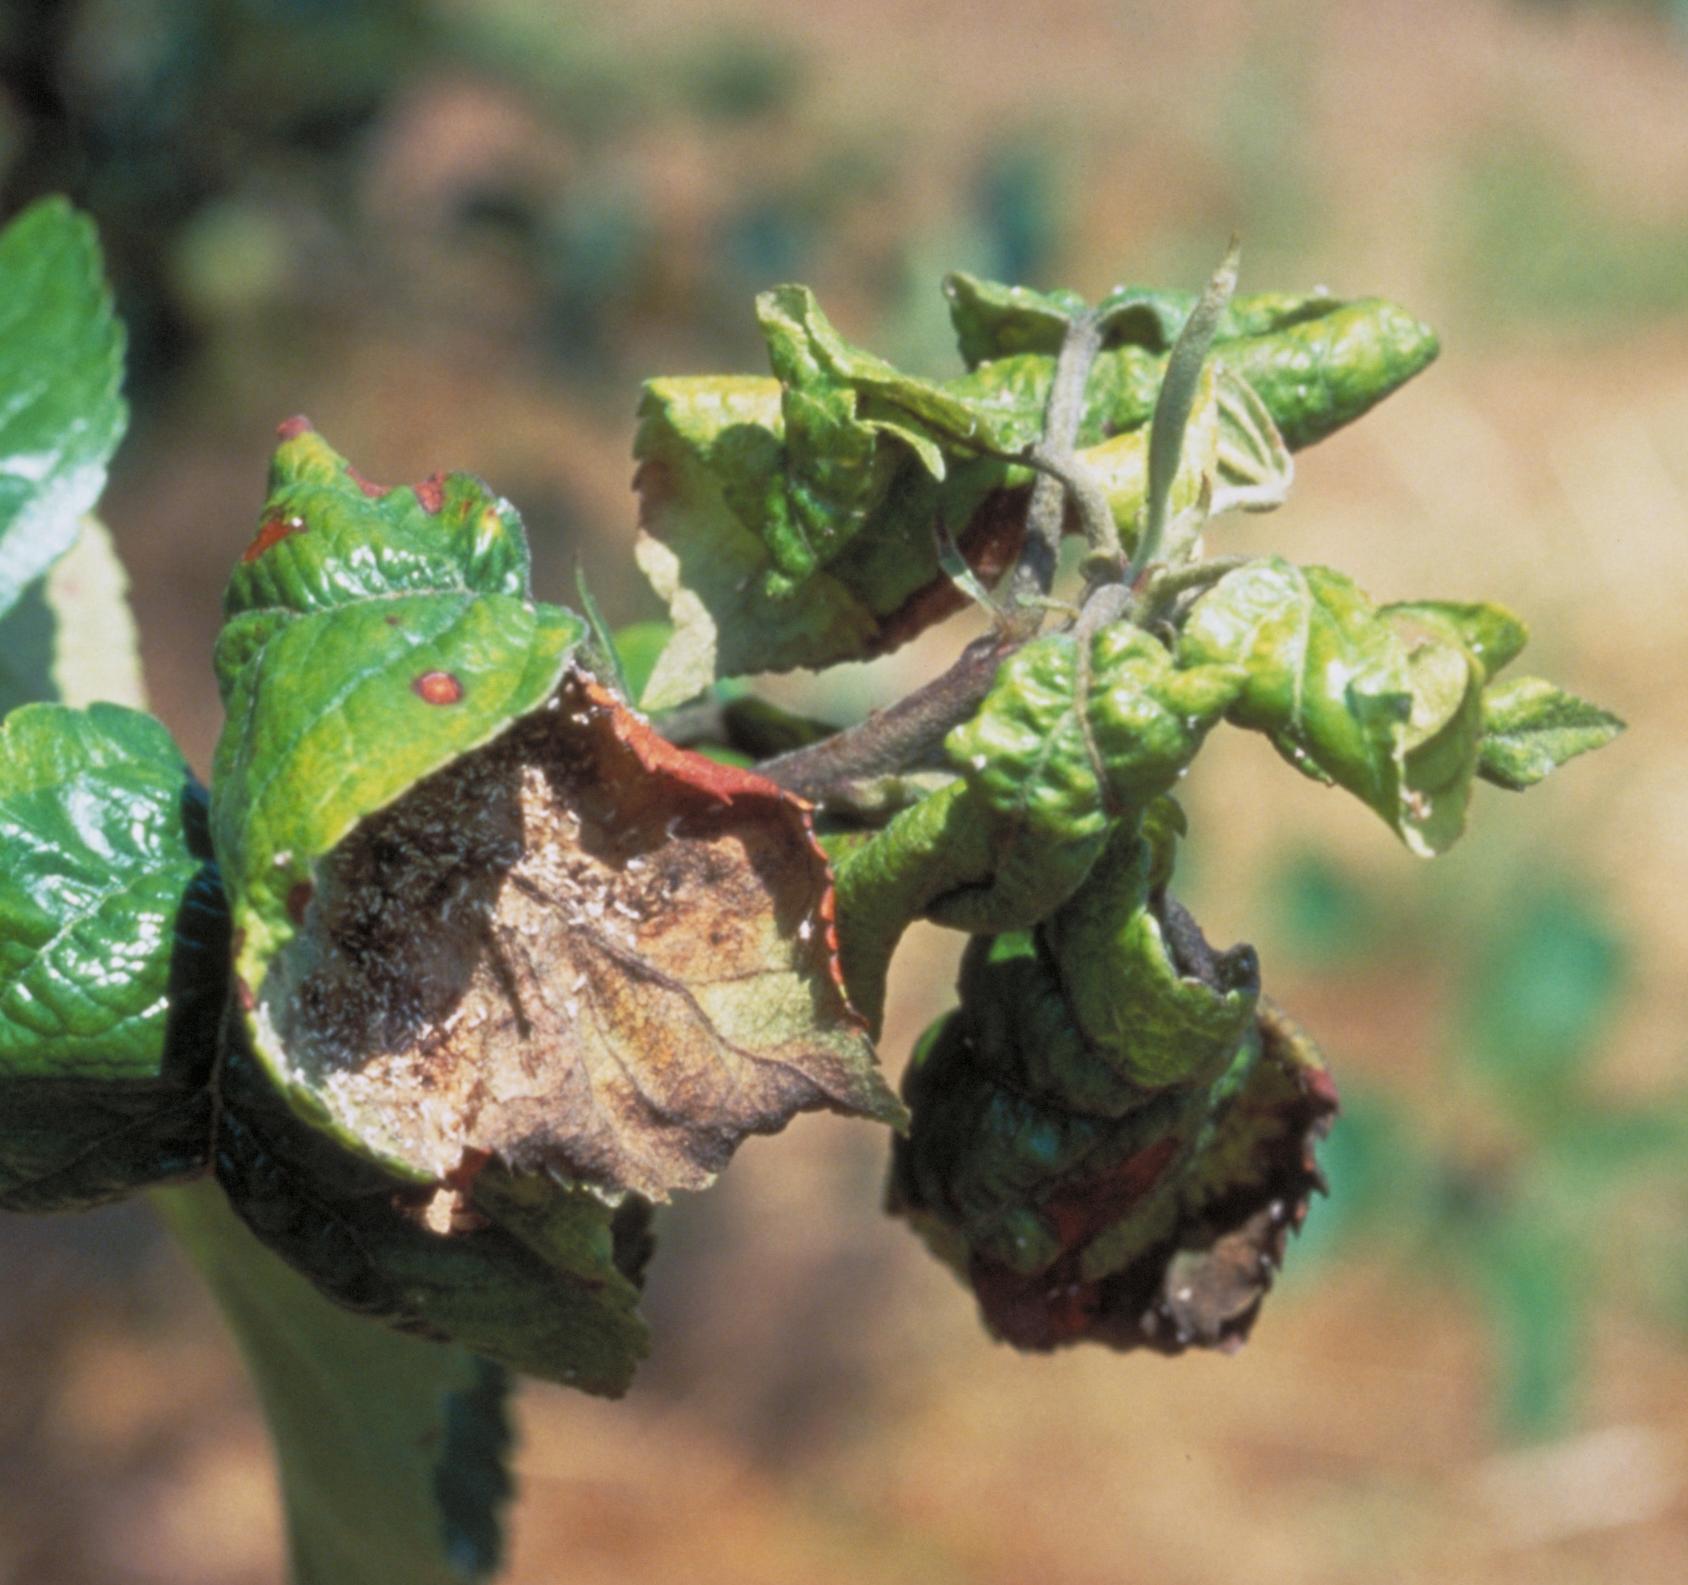 Rosy apple aphid foliar symptoms (Bessin, UKY)